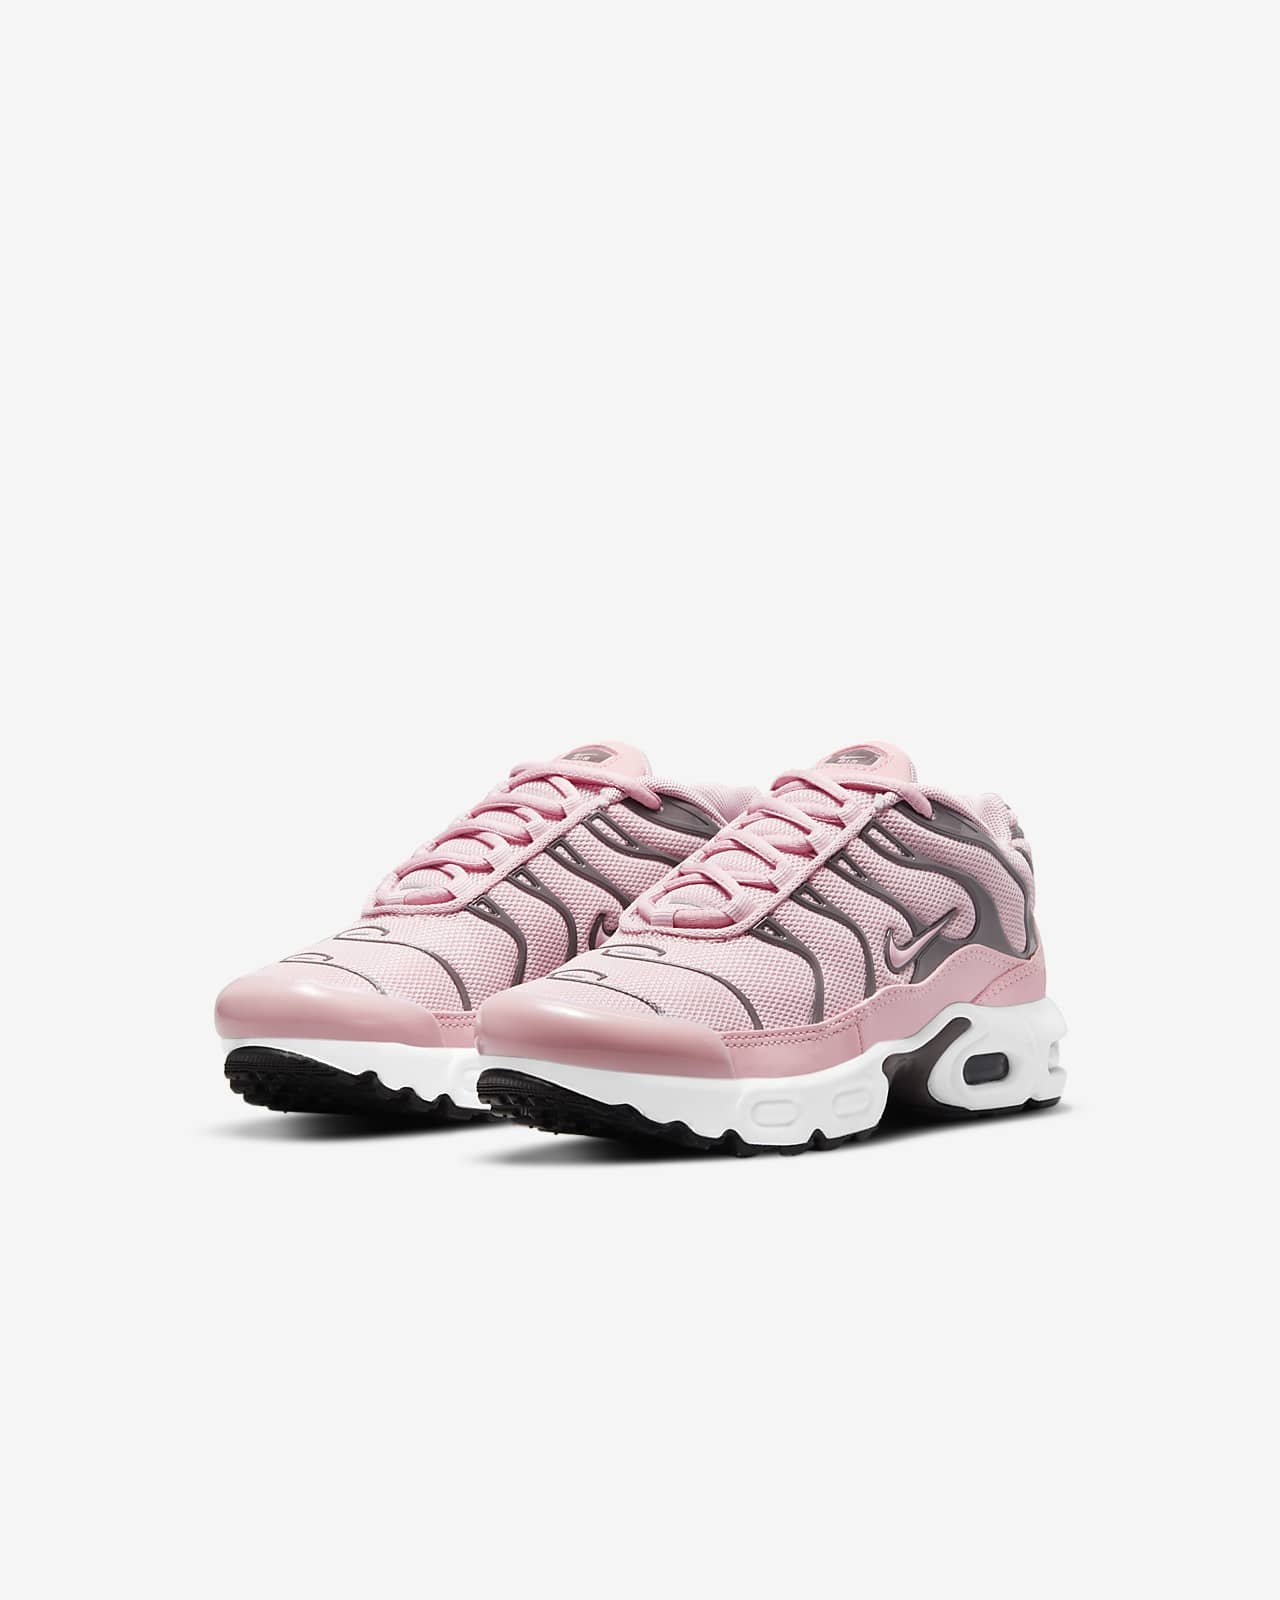 nike air max plus shoes pink